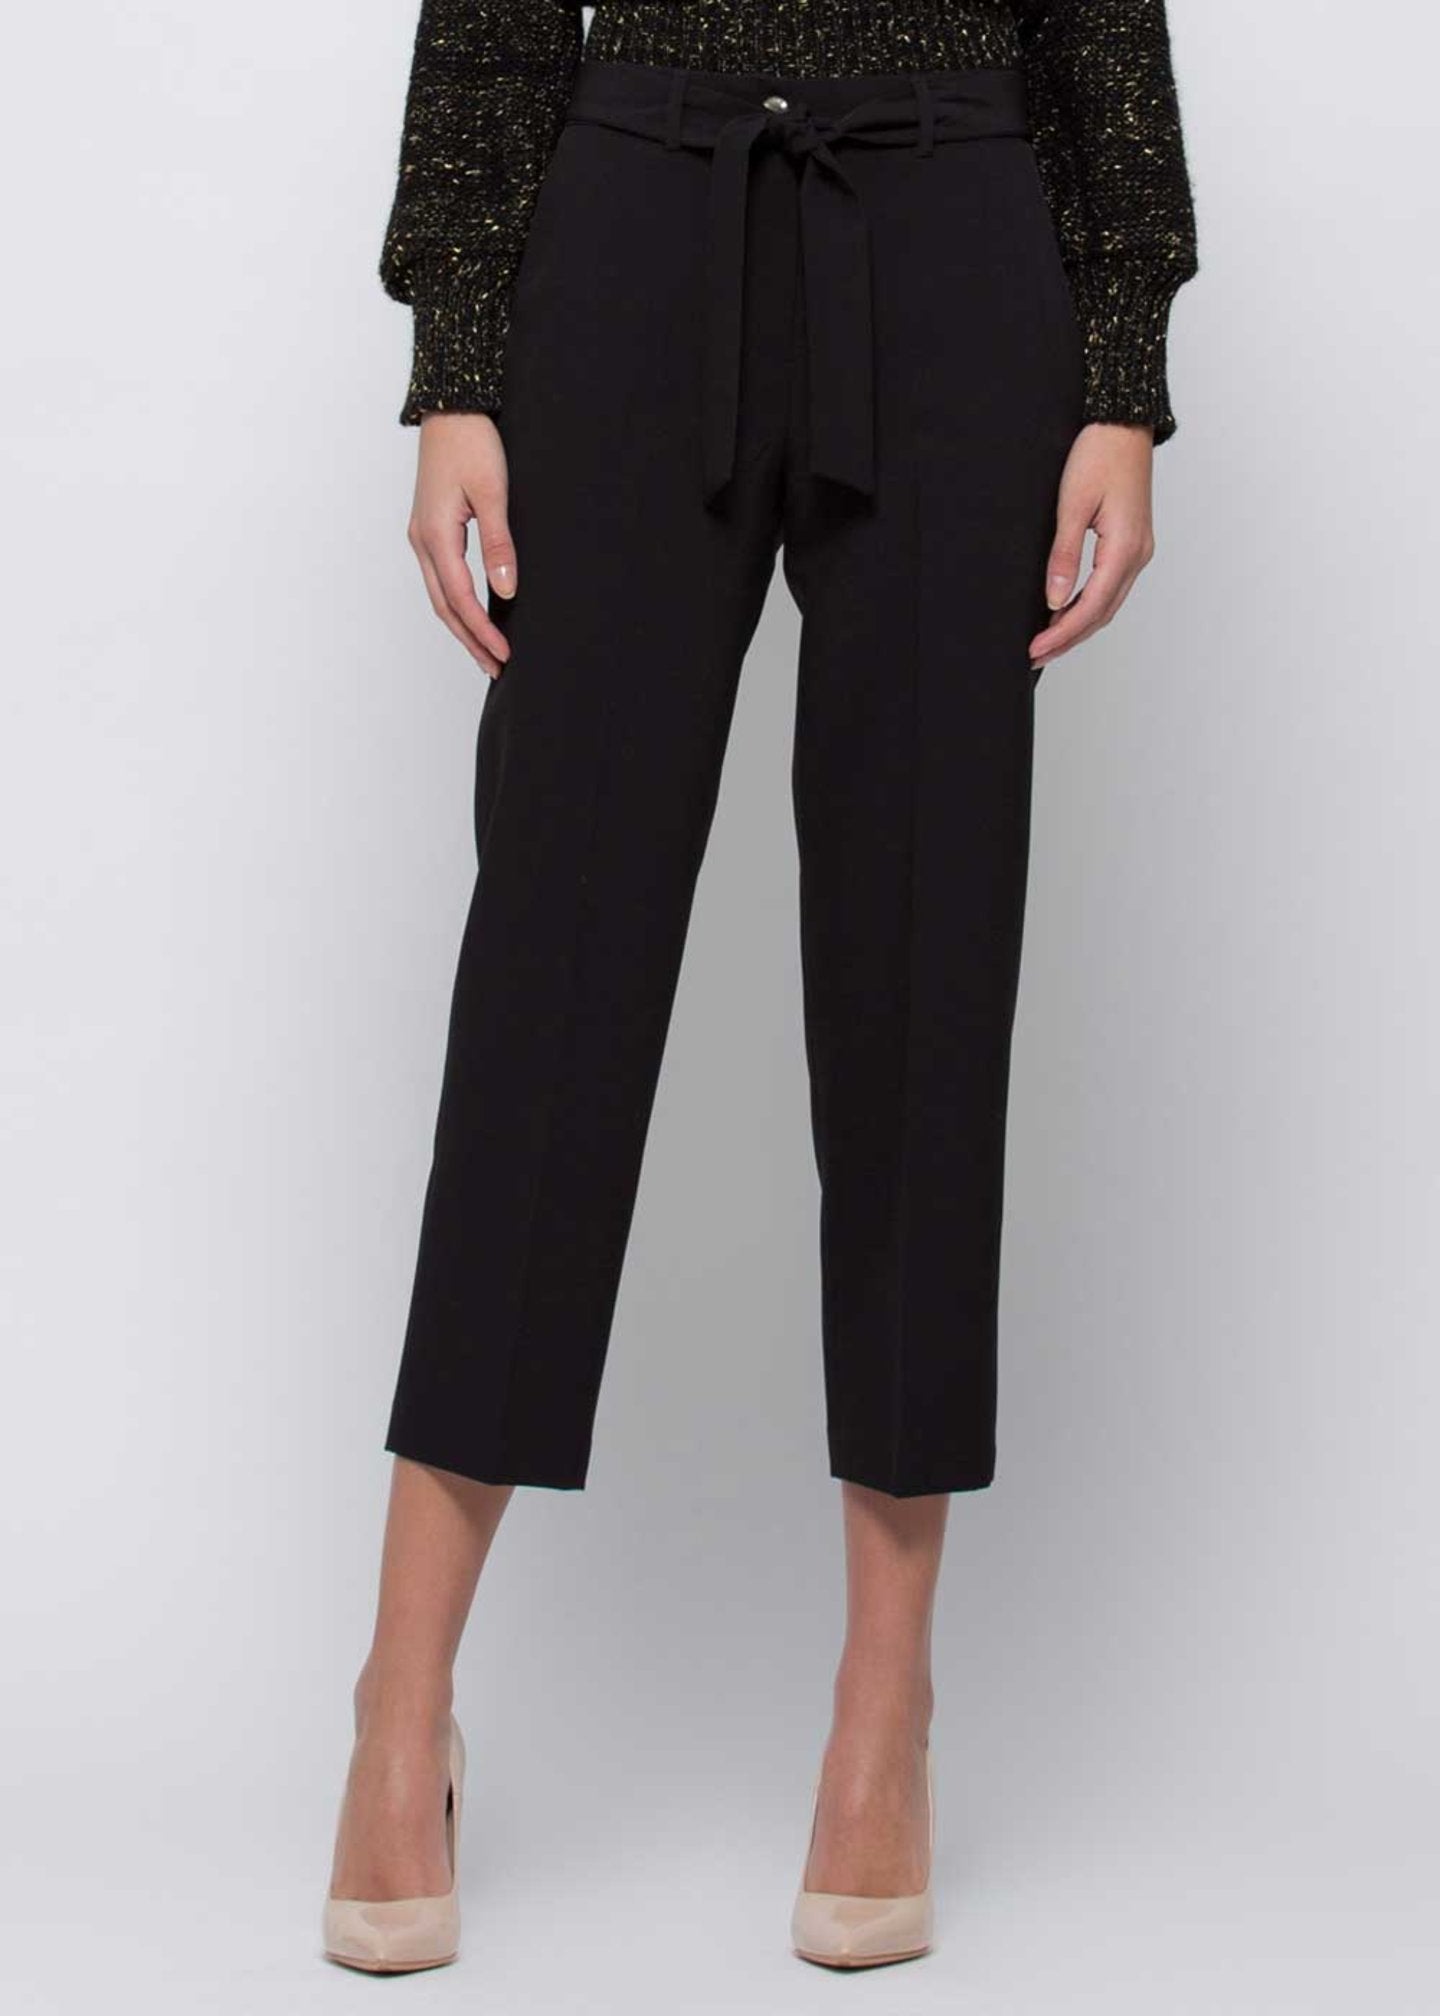 Pantalone Elegante Kocca / Nero - Ideal Moda